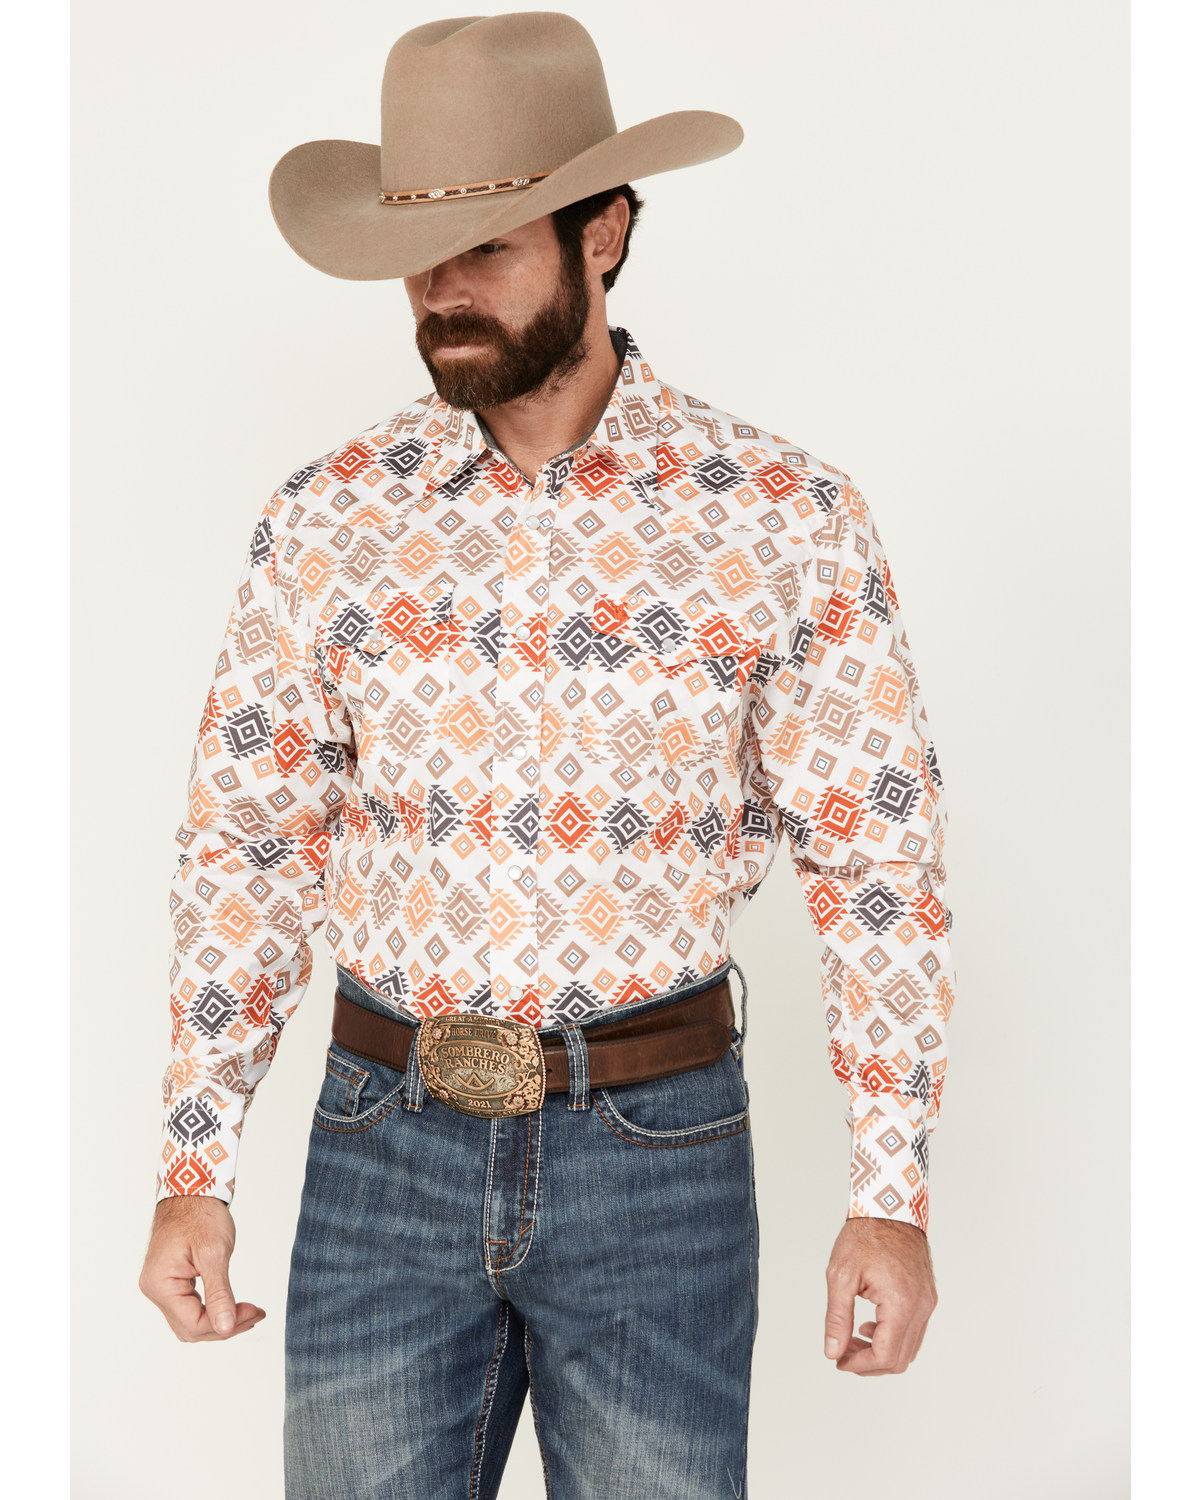 Rodeo Clothing Men's Southwestern Print Long Sleeve Pearl Snap Western Shirt